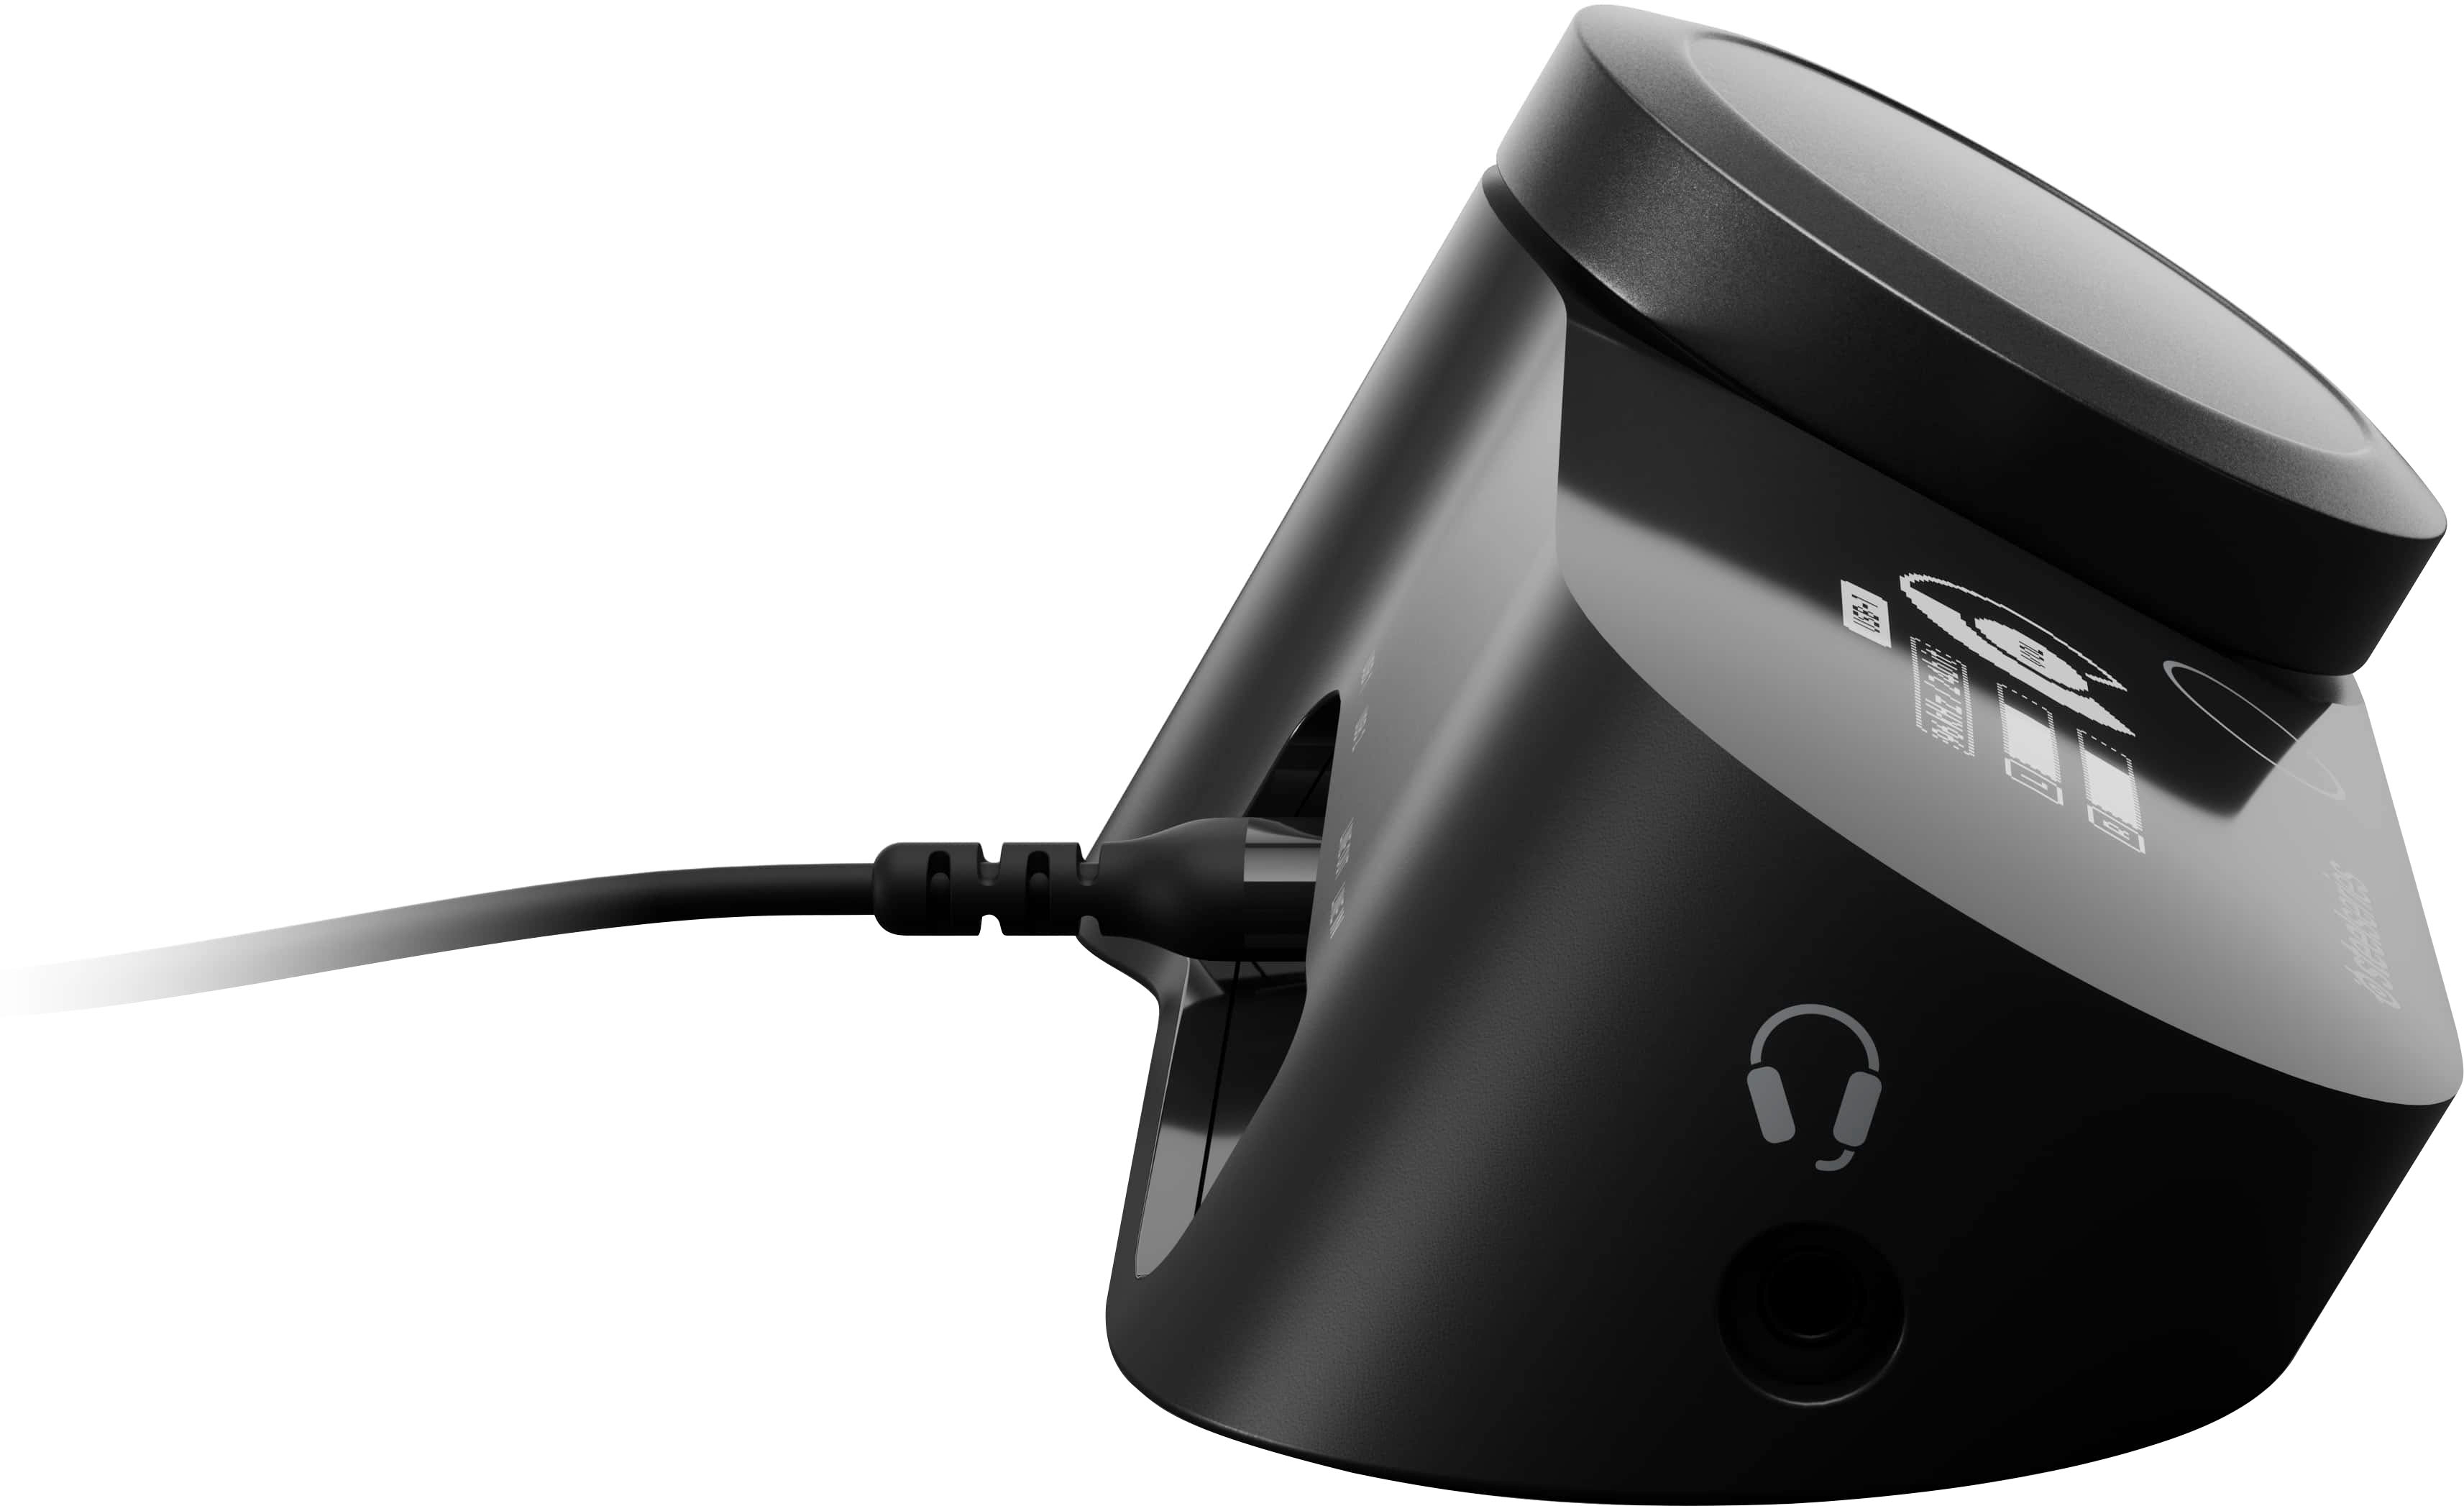 SteelSeries Arctis Nova Pro Wired Multi Gaming Headset for Xbox Black 61528  - Best Buy